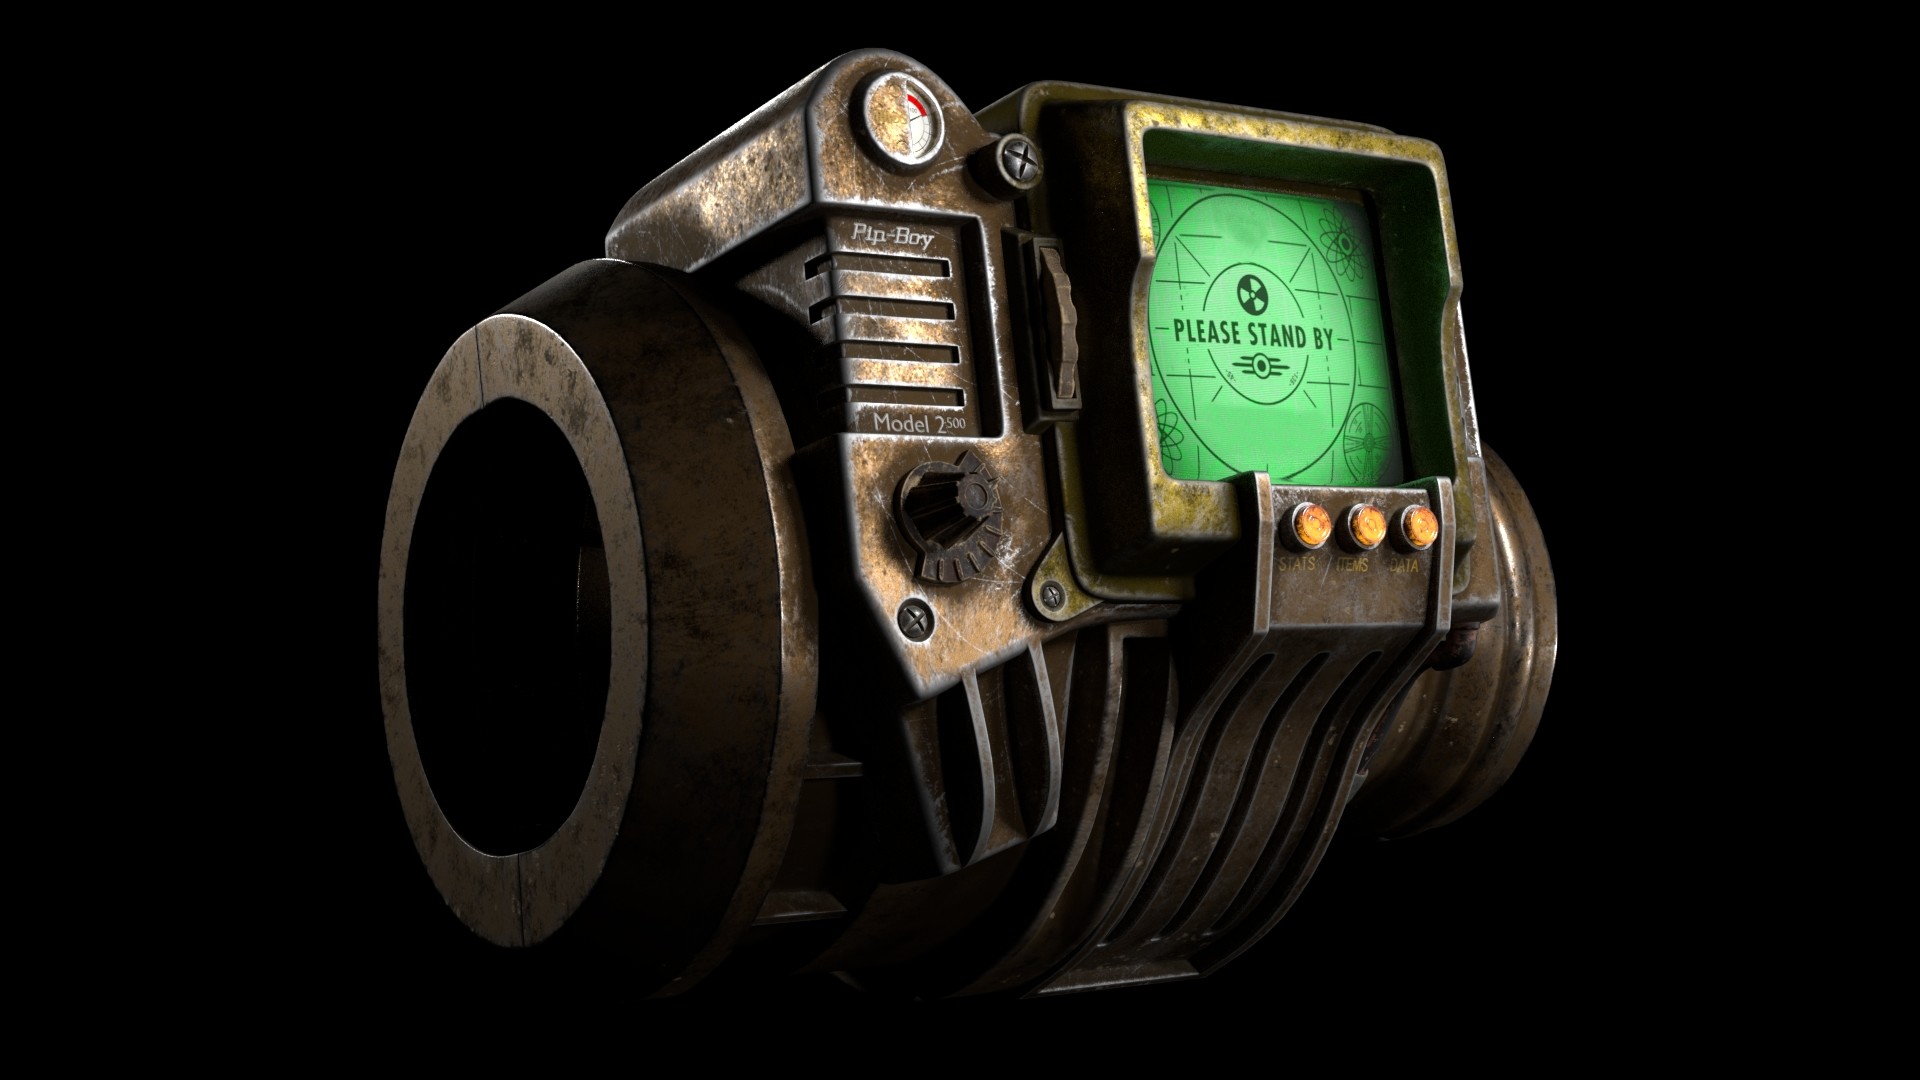 Fallout 4 пип бой заказать фото 115